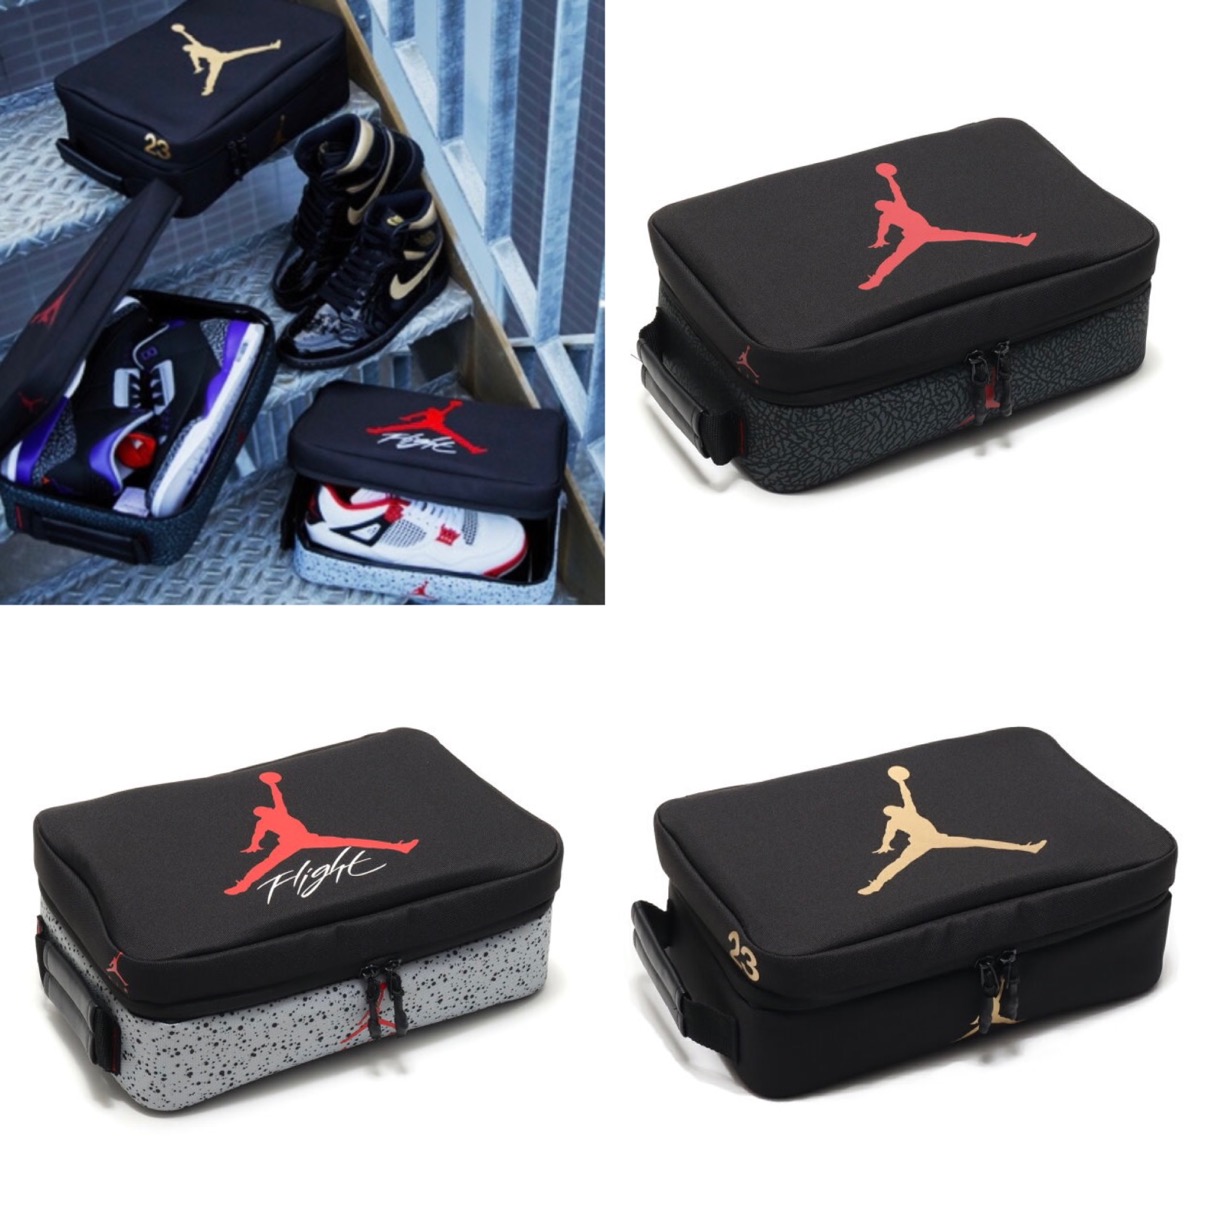 Nike】JORDAN BRAND THE SHOES BOXが国内11月26日に発売予定 | UP TO DATE